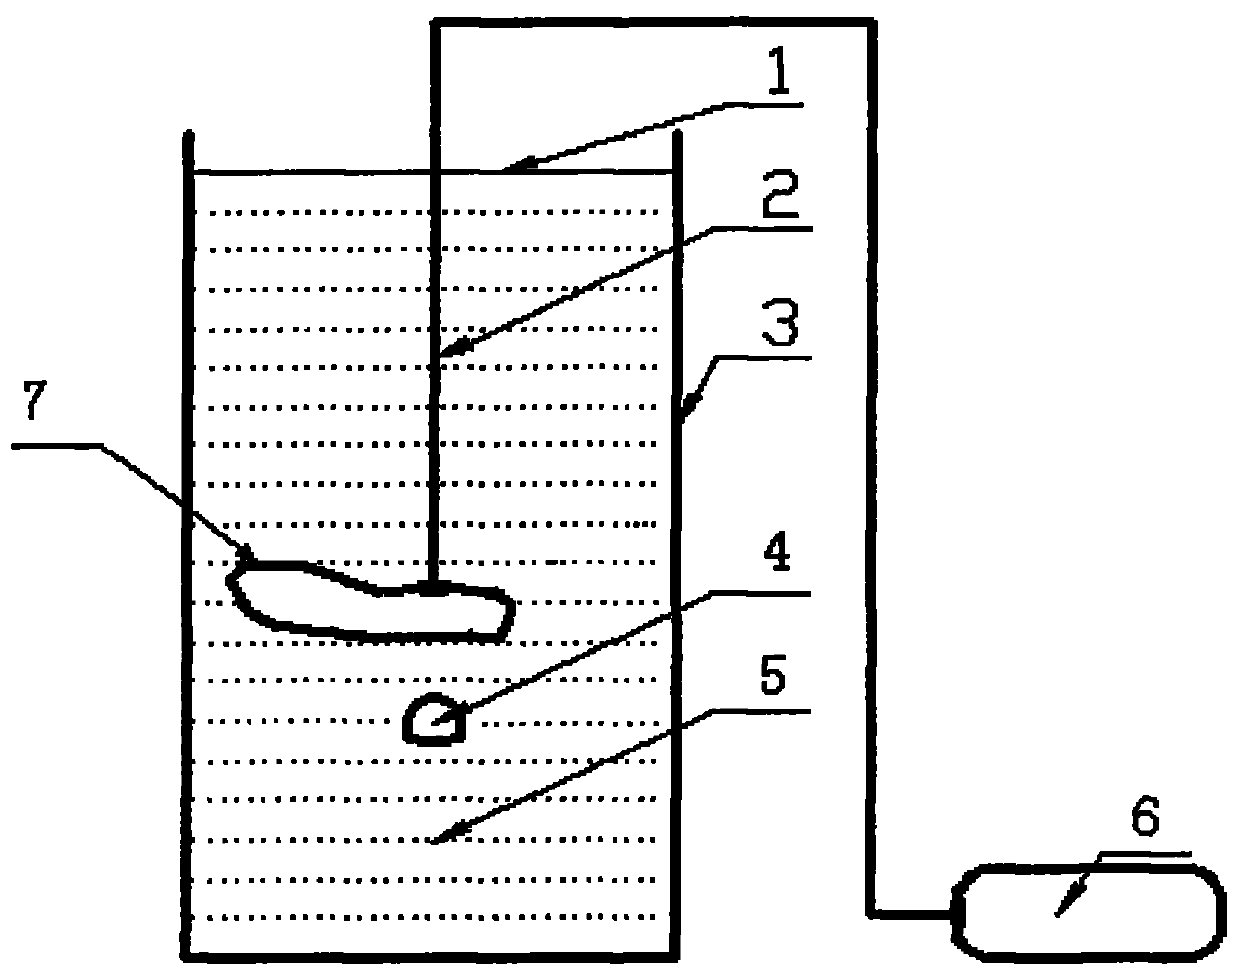 Filler-free type karst cave or karst pipeline system in similar model test and embedding method thereof